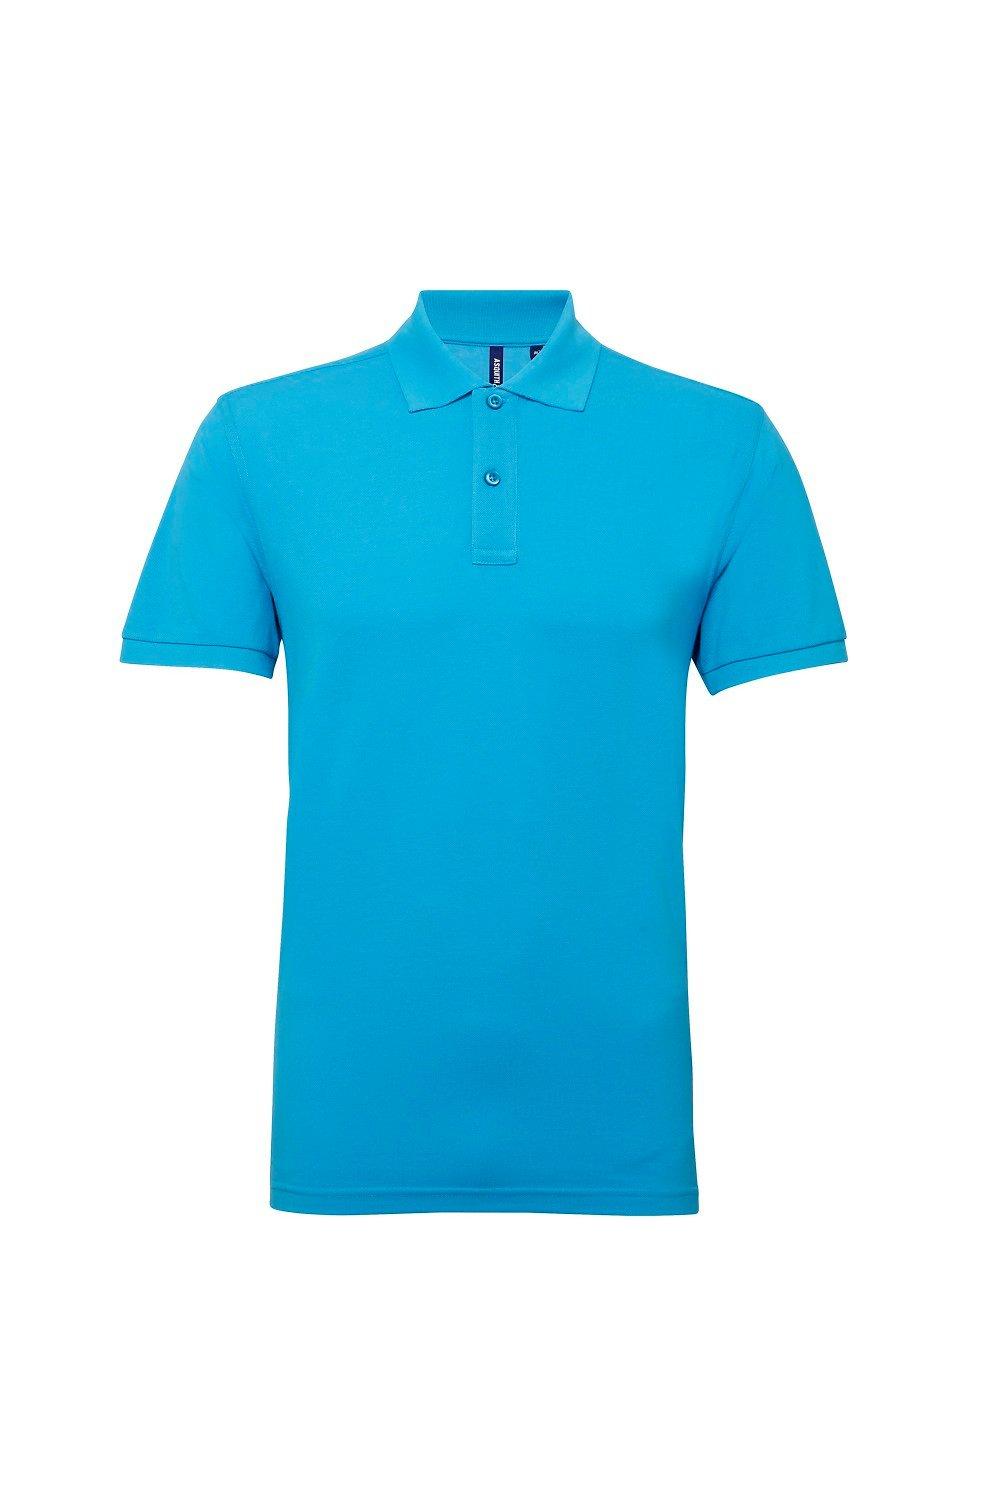 цена Рубашка поло Performance Mix с короткими рукавами Asquith & Fox, синий